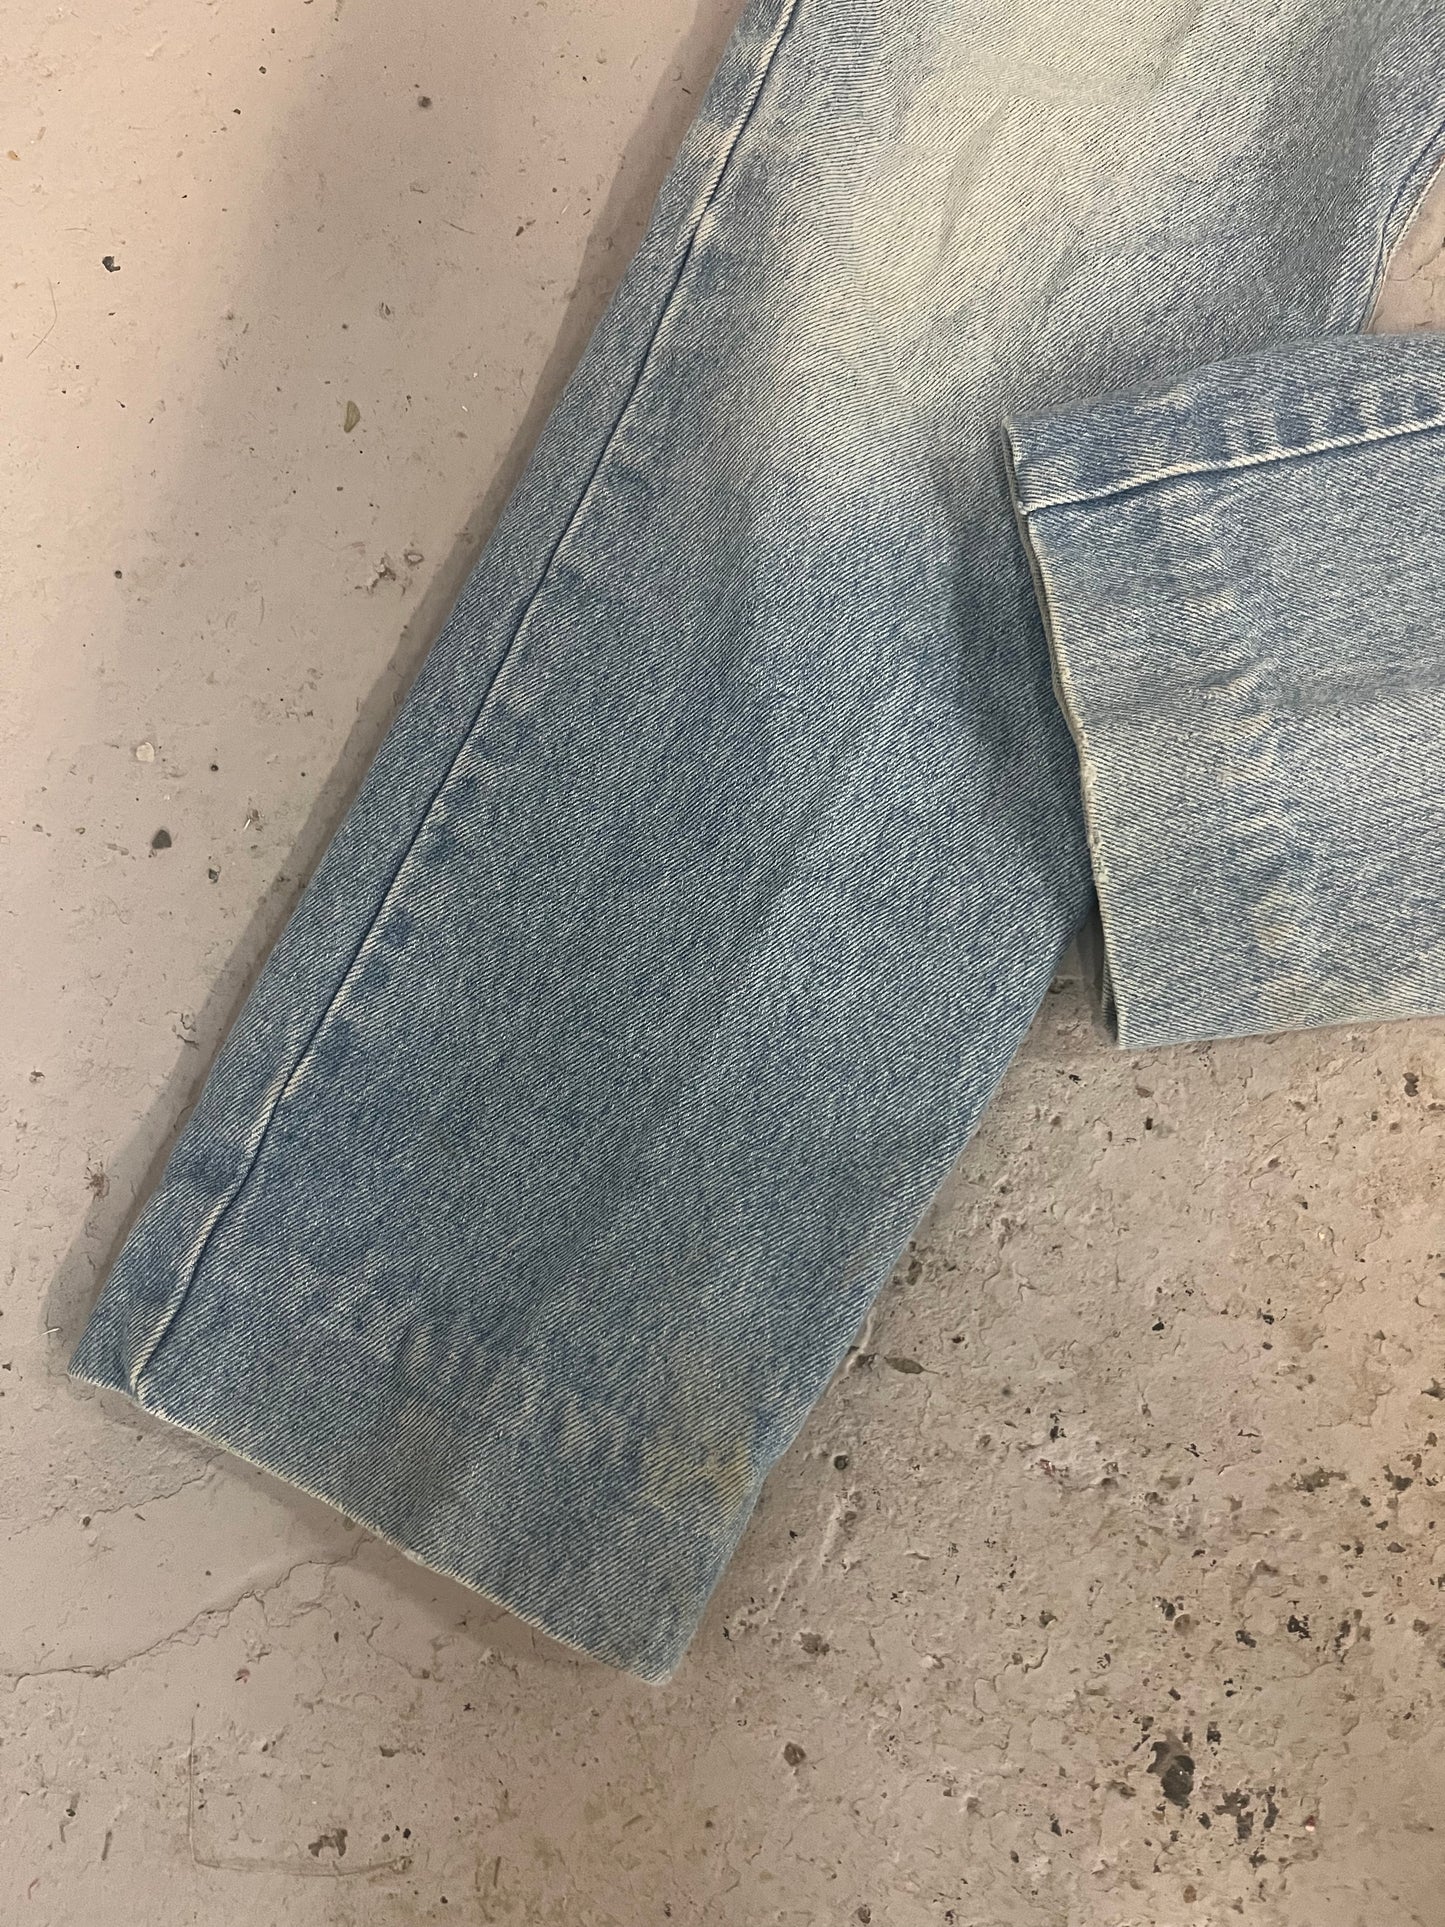 90’s Vintage Faded Light Wash Straight Leg Jeans / 32 Waist